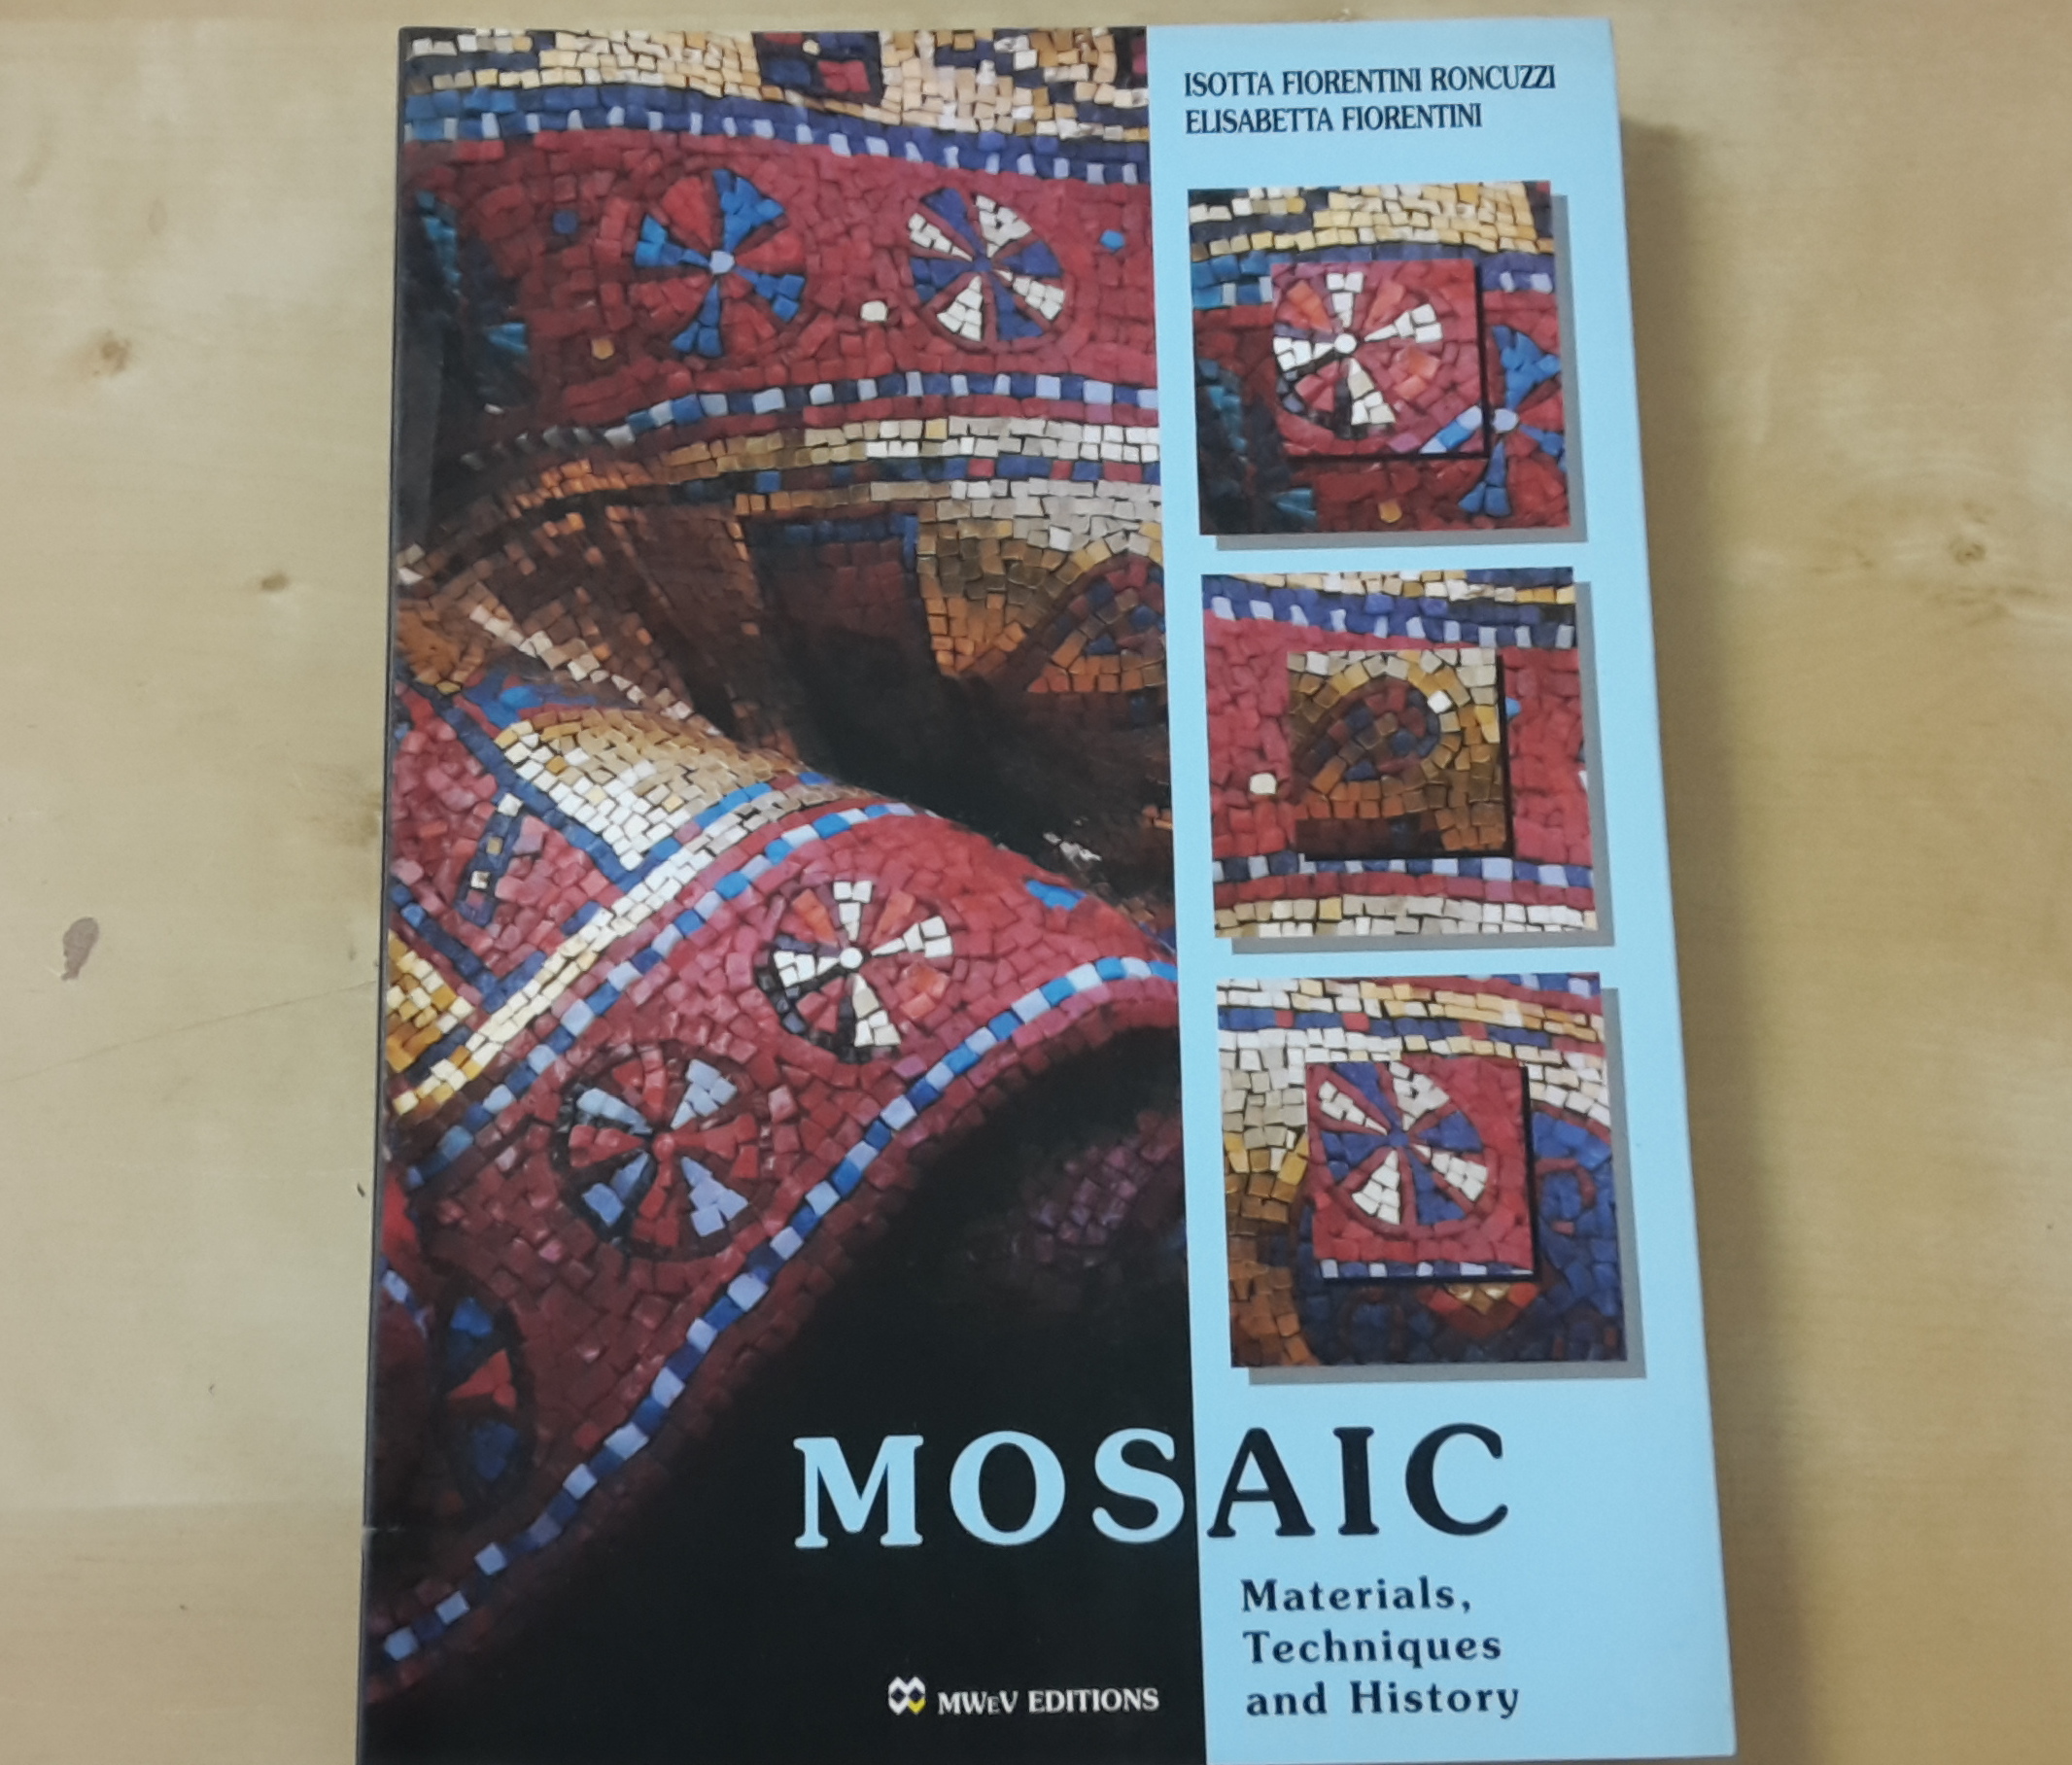 MOSAIC, Materials Techniques and History (I. Roncuzzi, E. Fioren